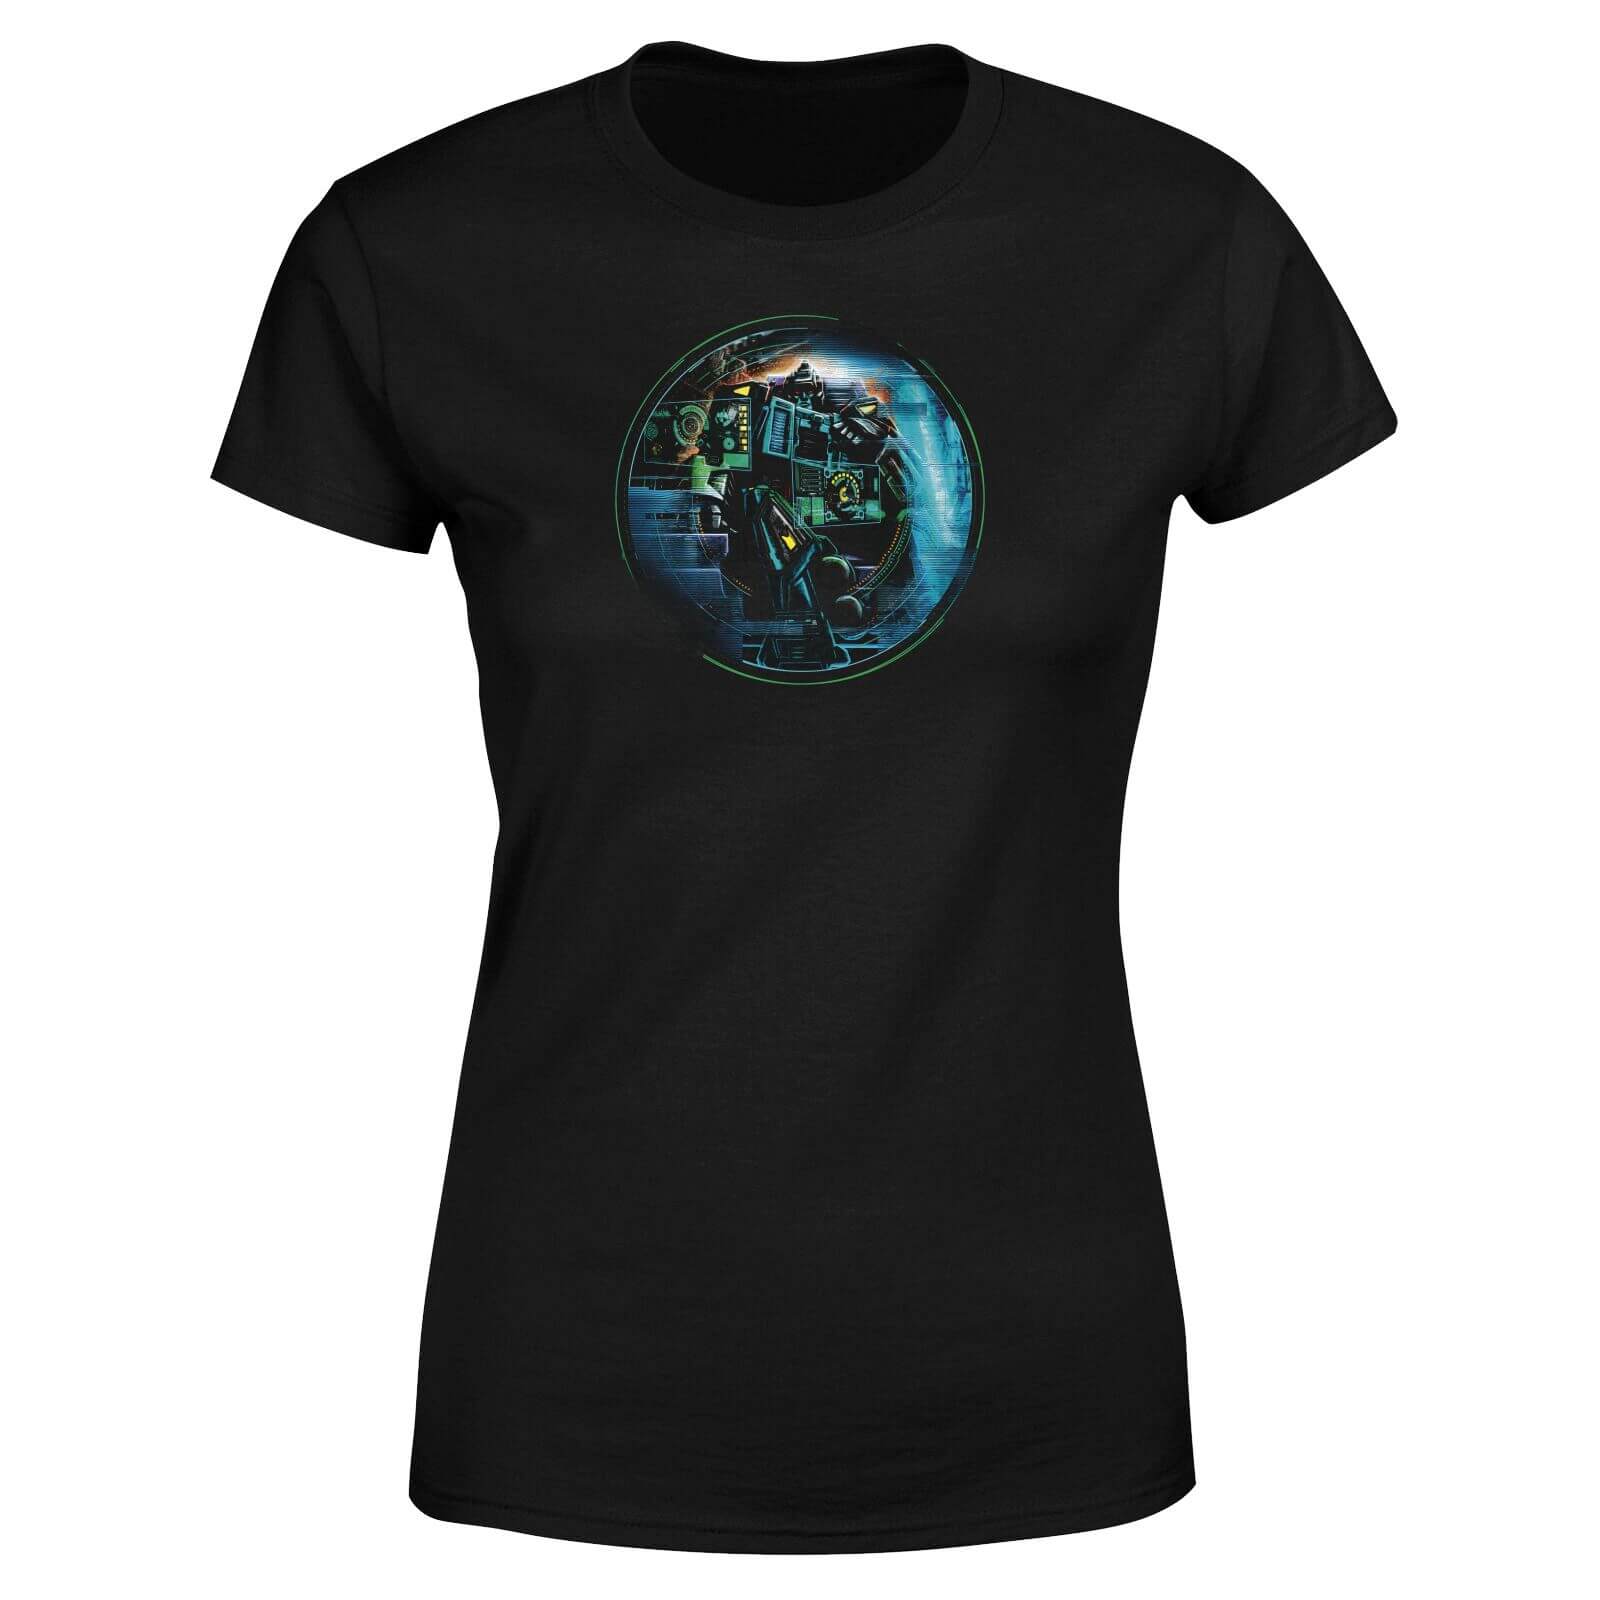 Transformers Double Dealer Women's T-Shirt - Black - S - Black